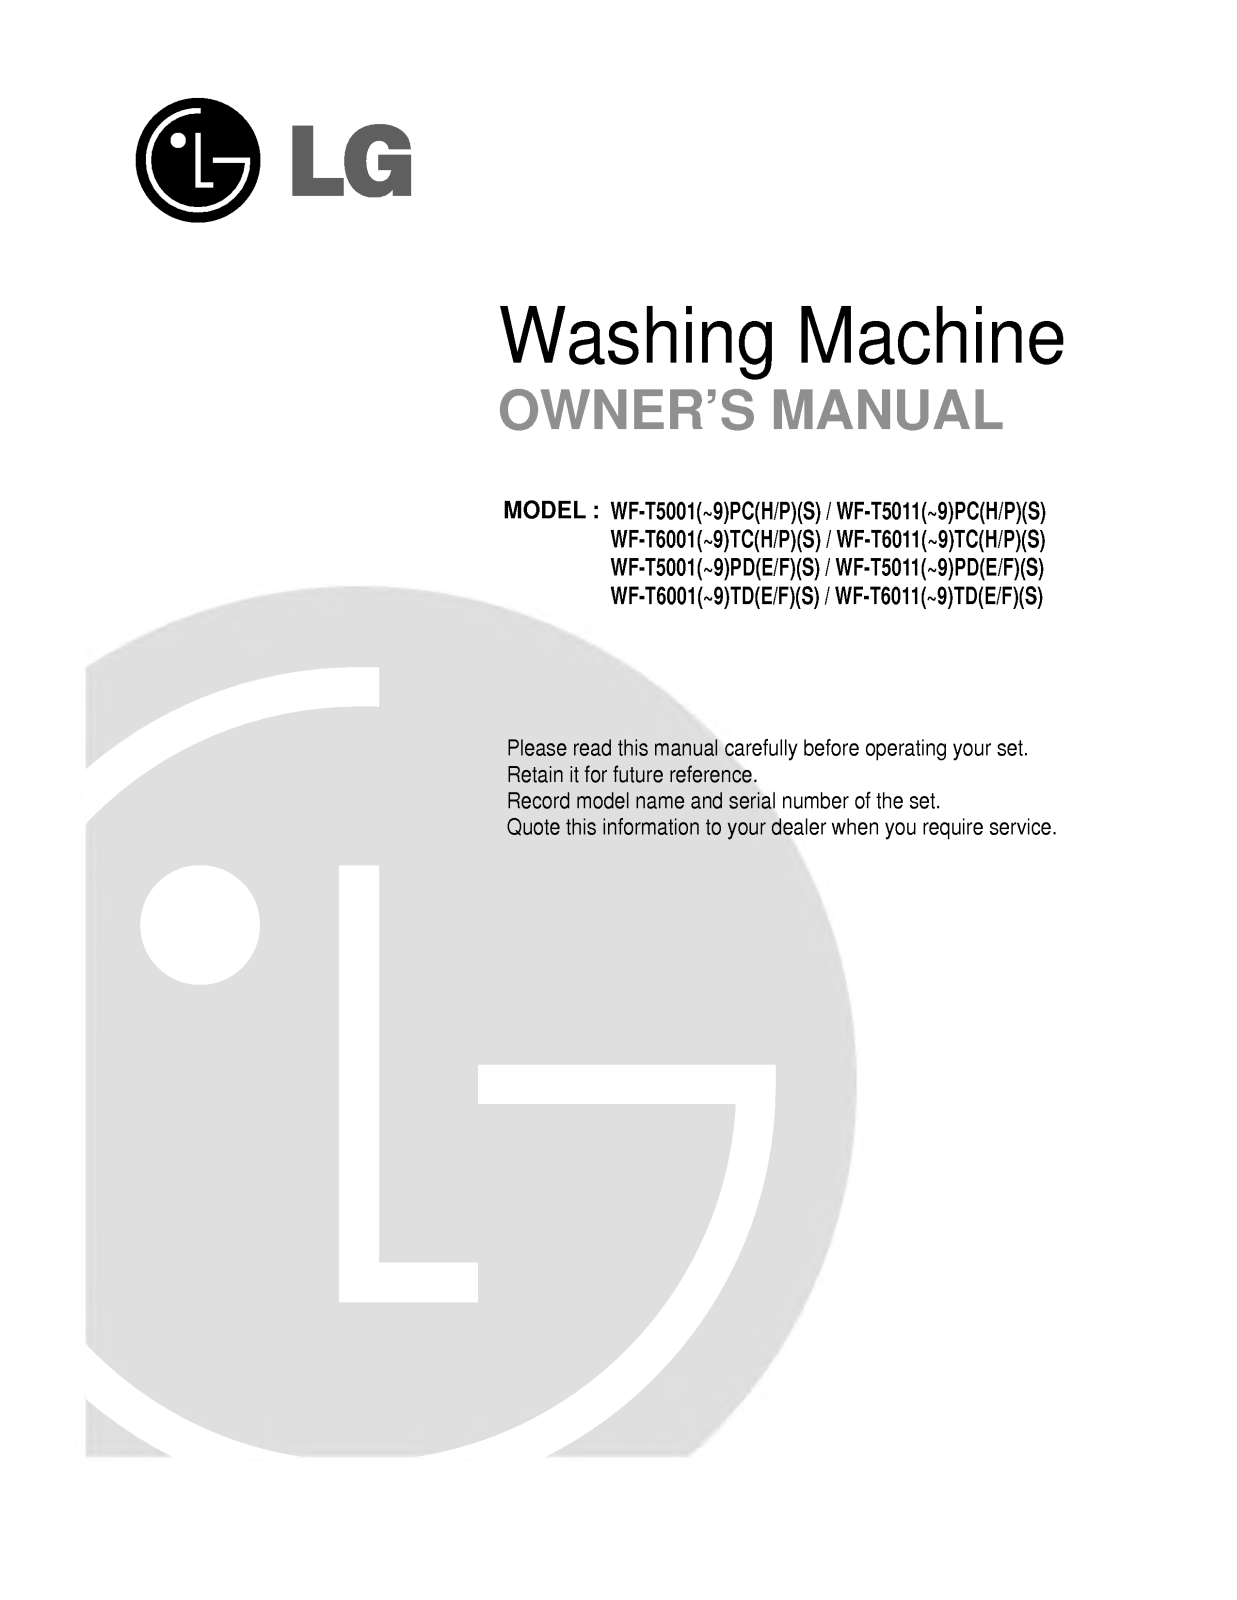 LG WF-T7015TP Manual